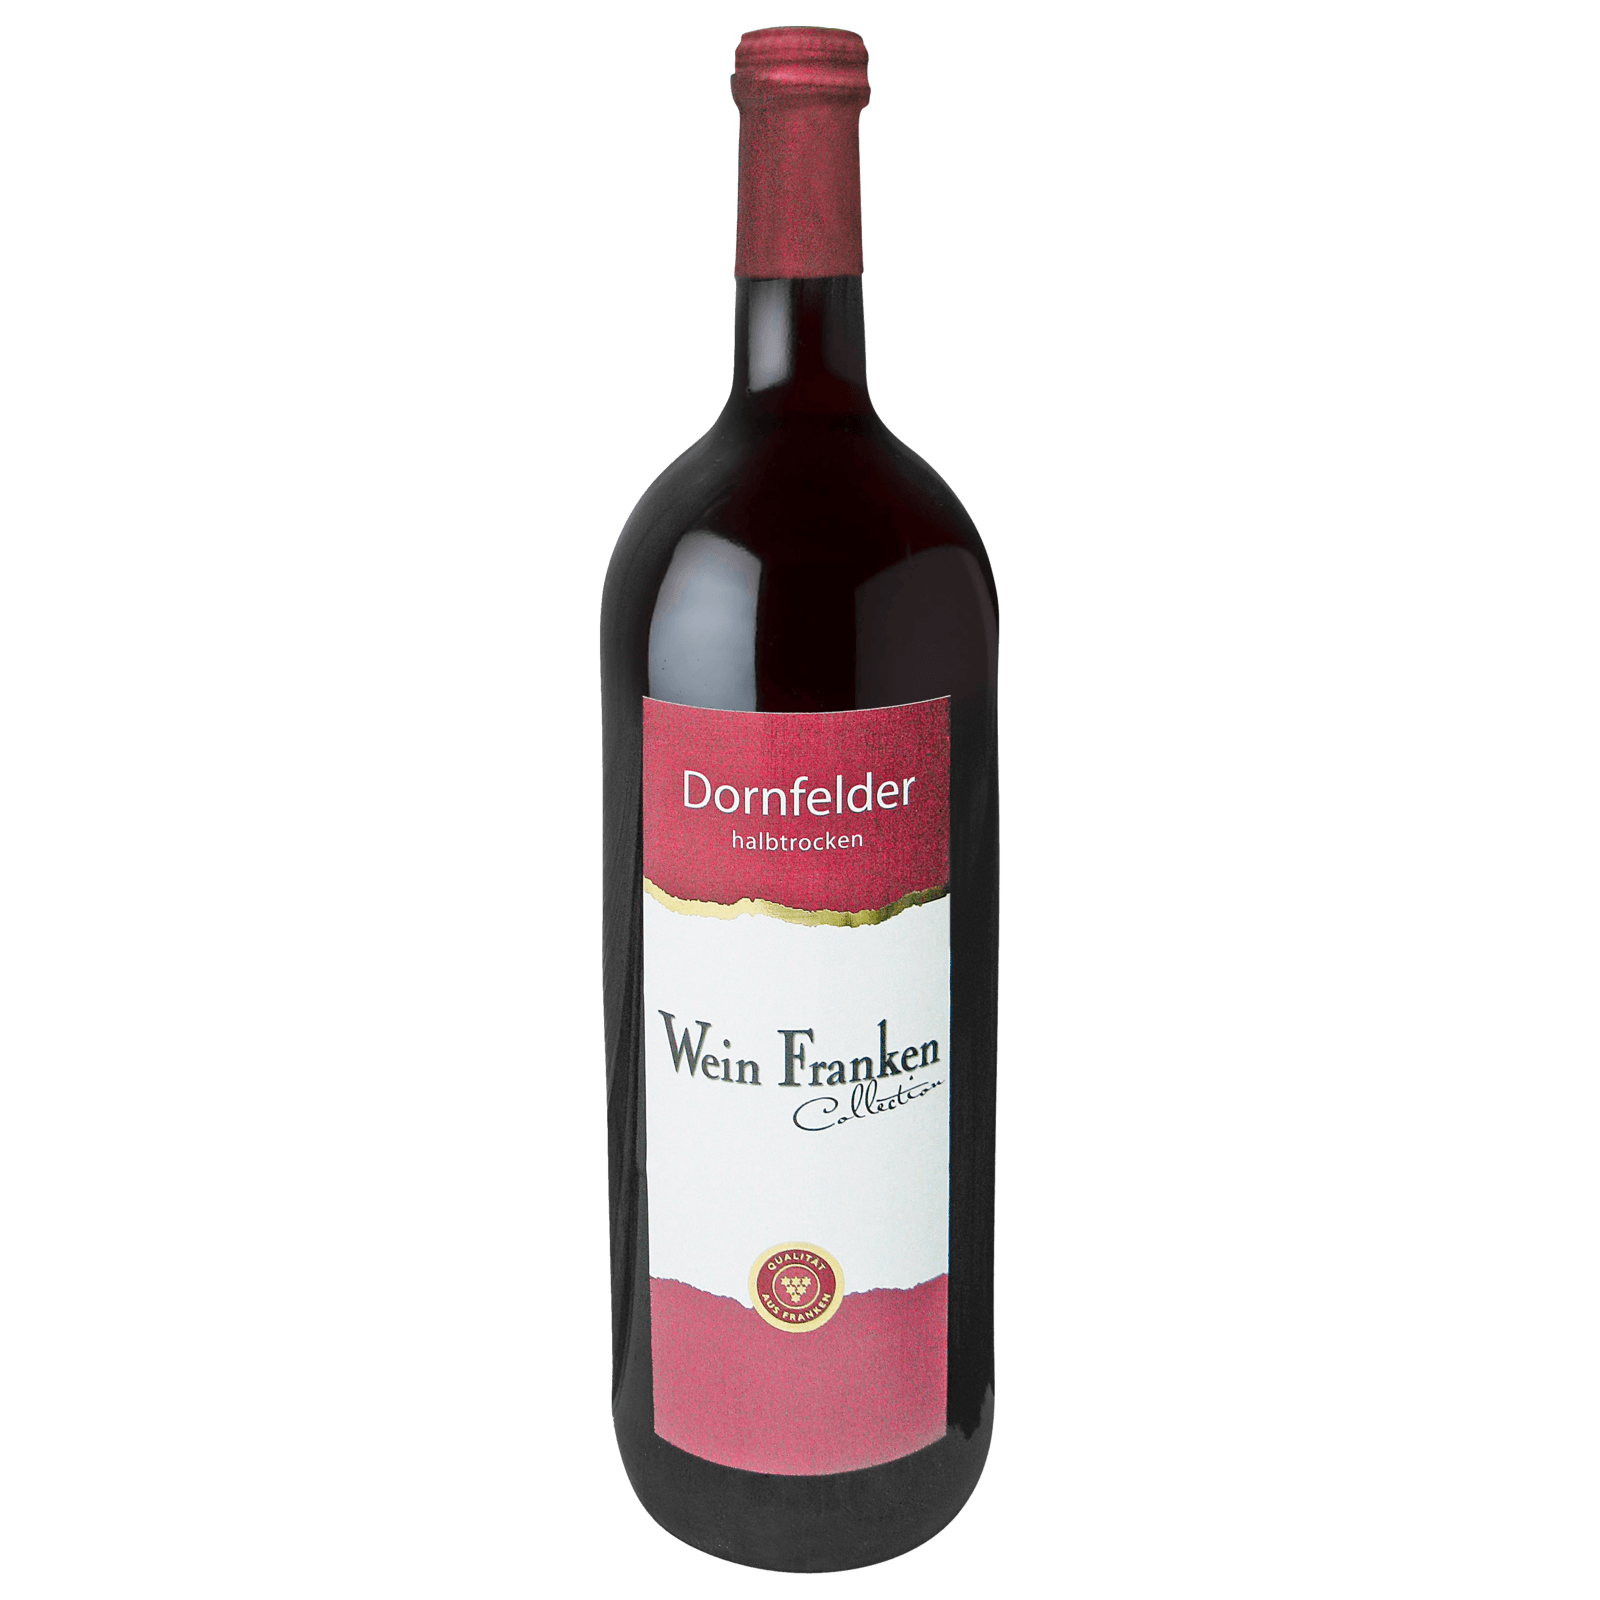 Wein Franken Rotwein Dornfelder QbA halbtrocken 1l bei REWE online  bestellen!